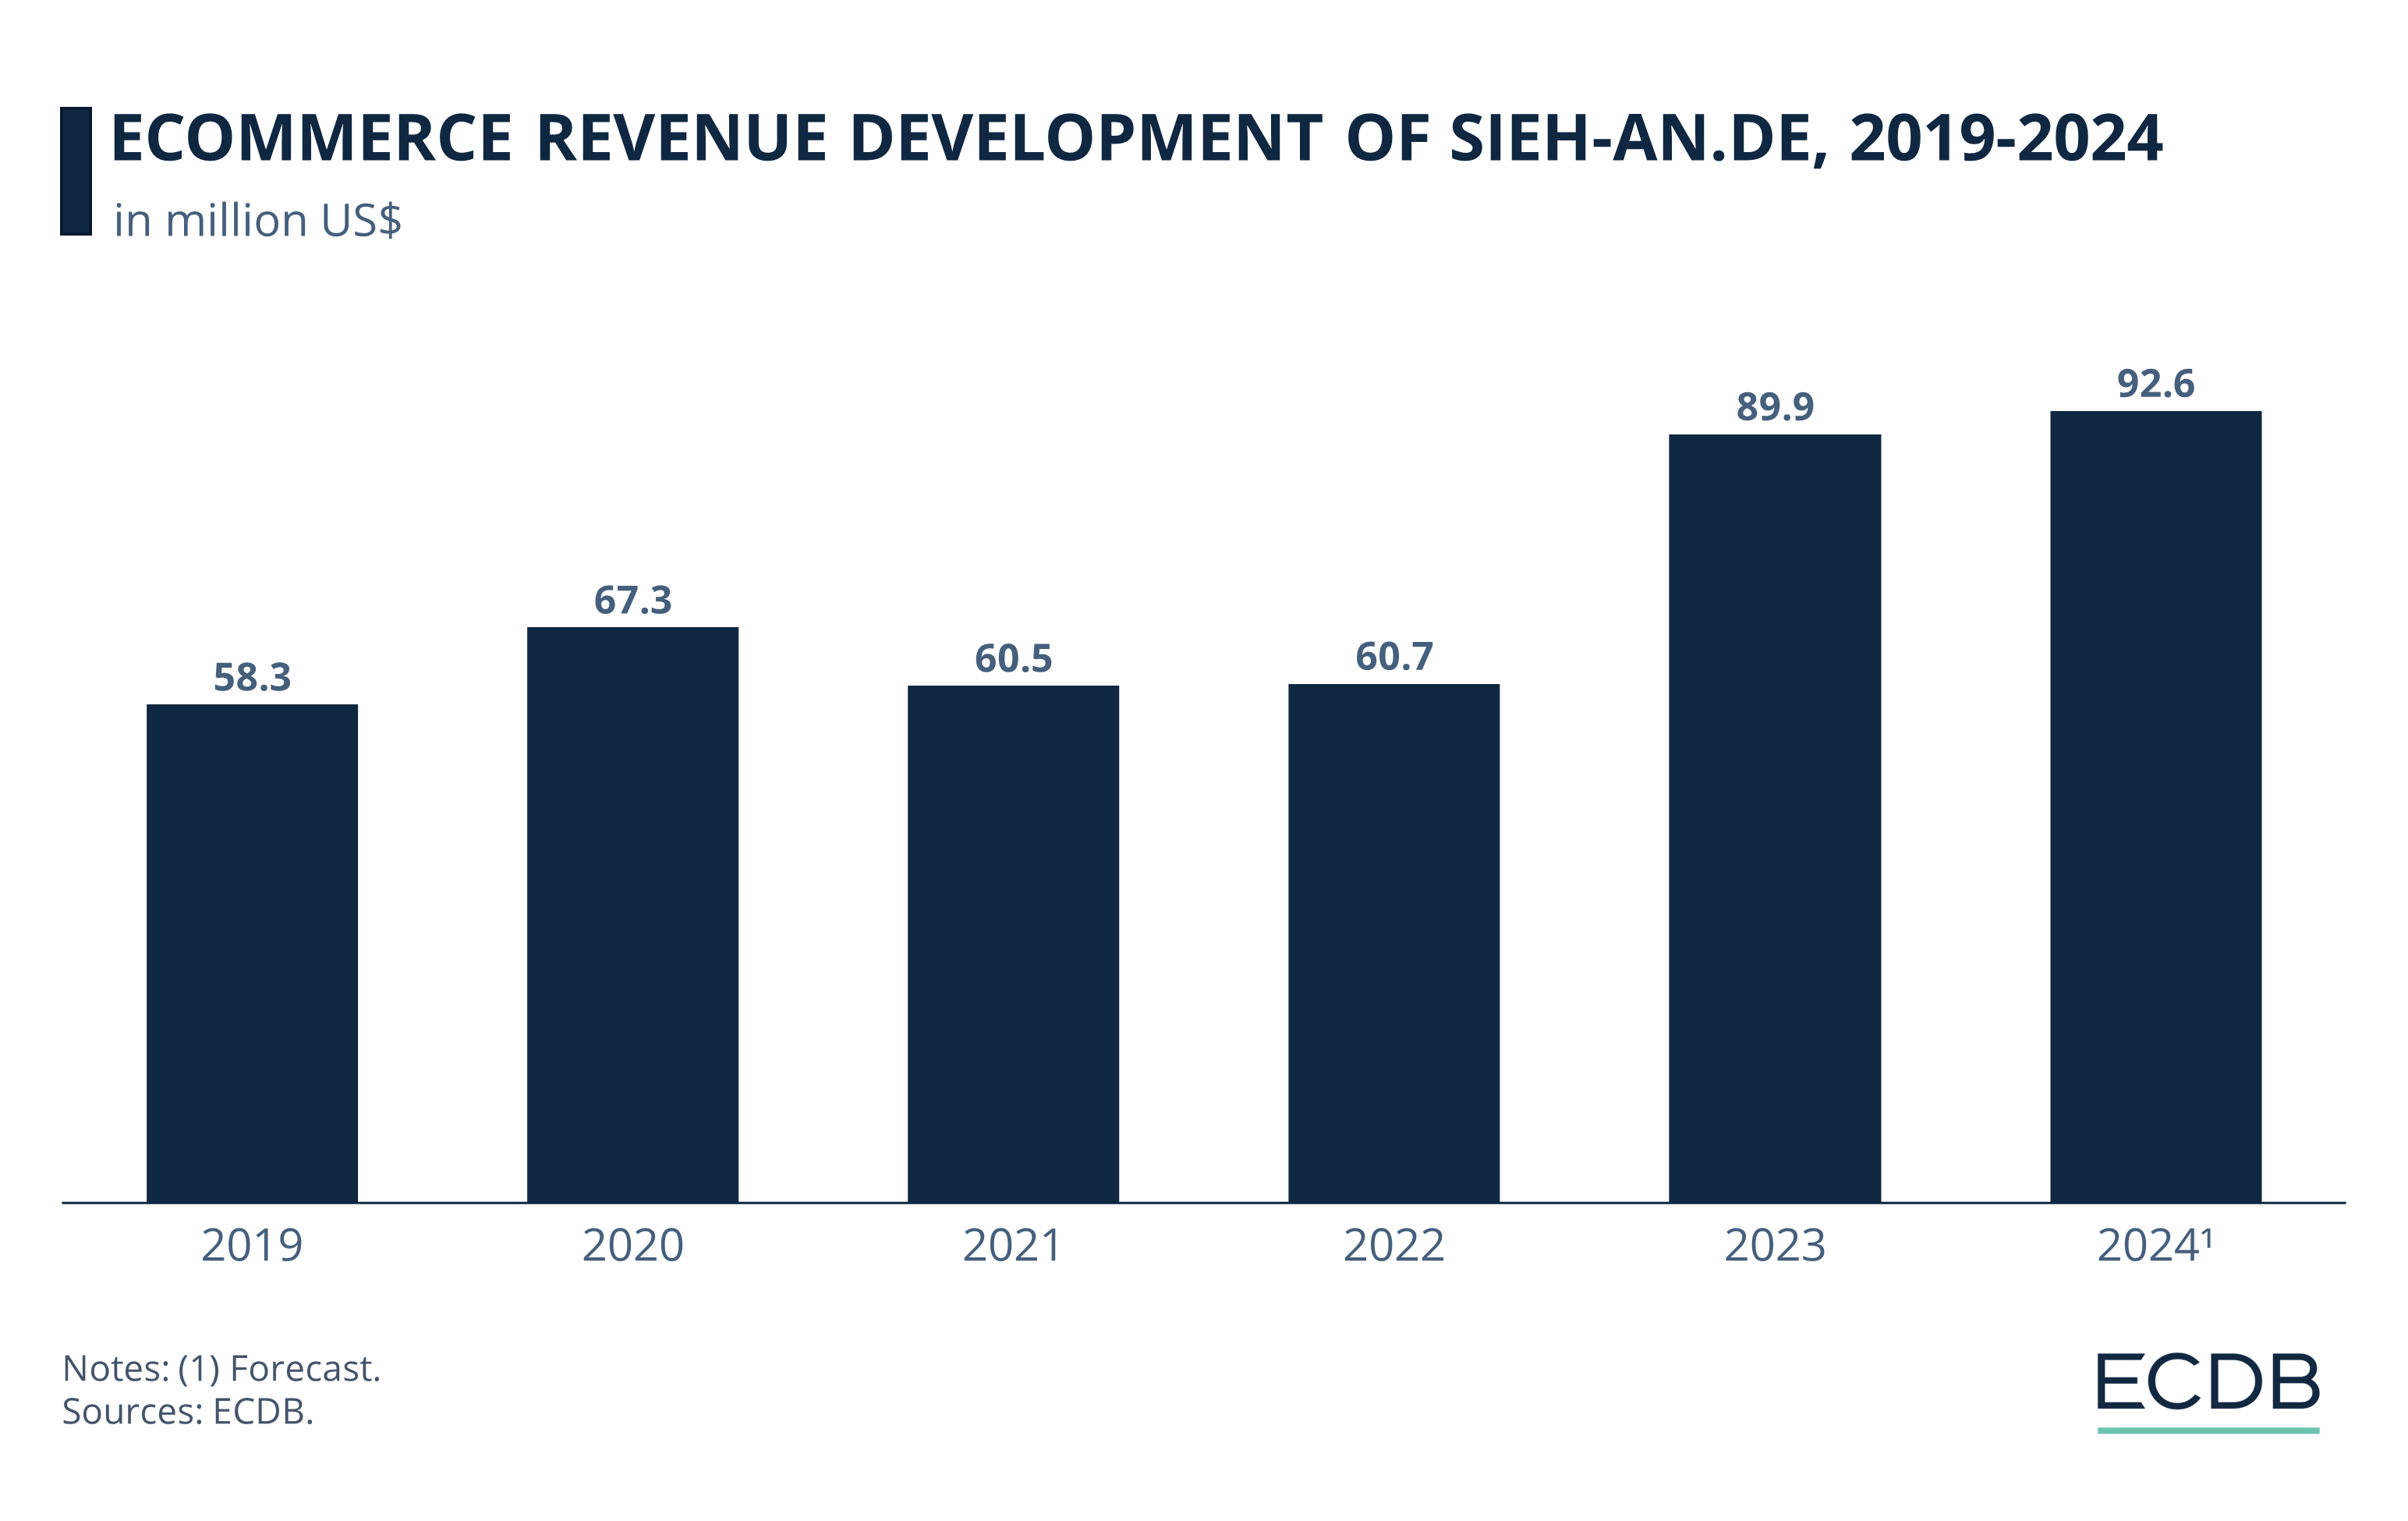 eCommerce Revenue Development of Sieh-an.de, 2019-2024